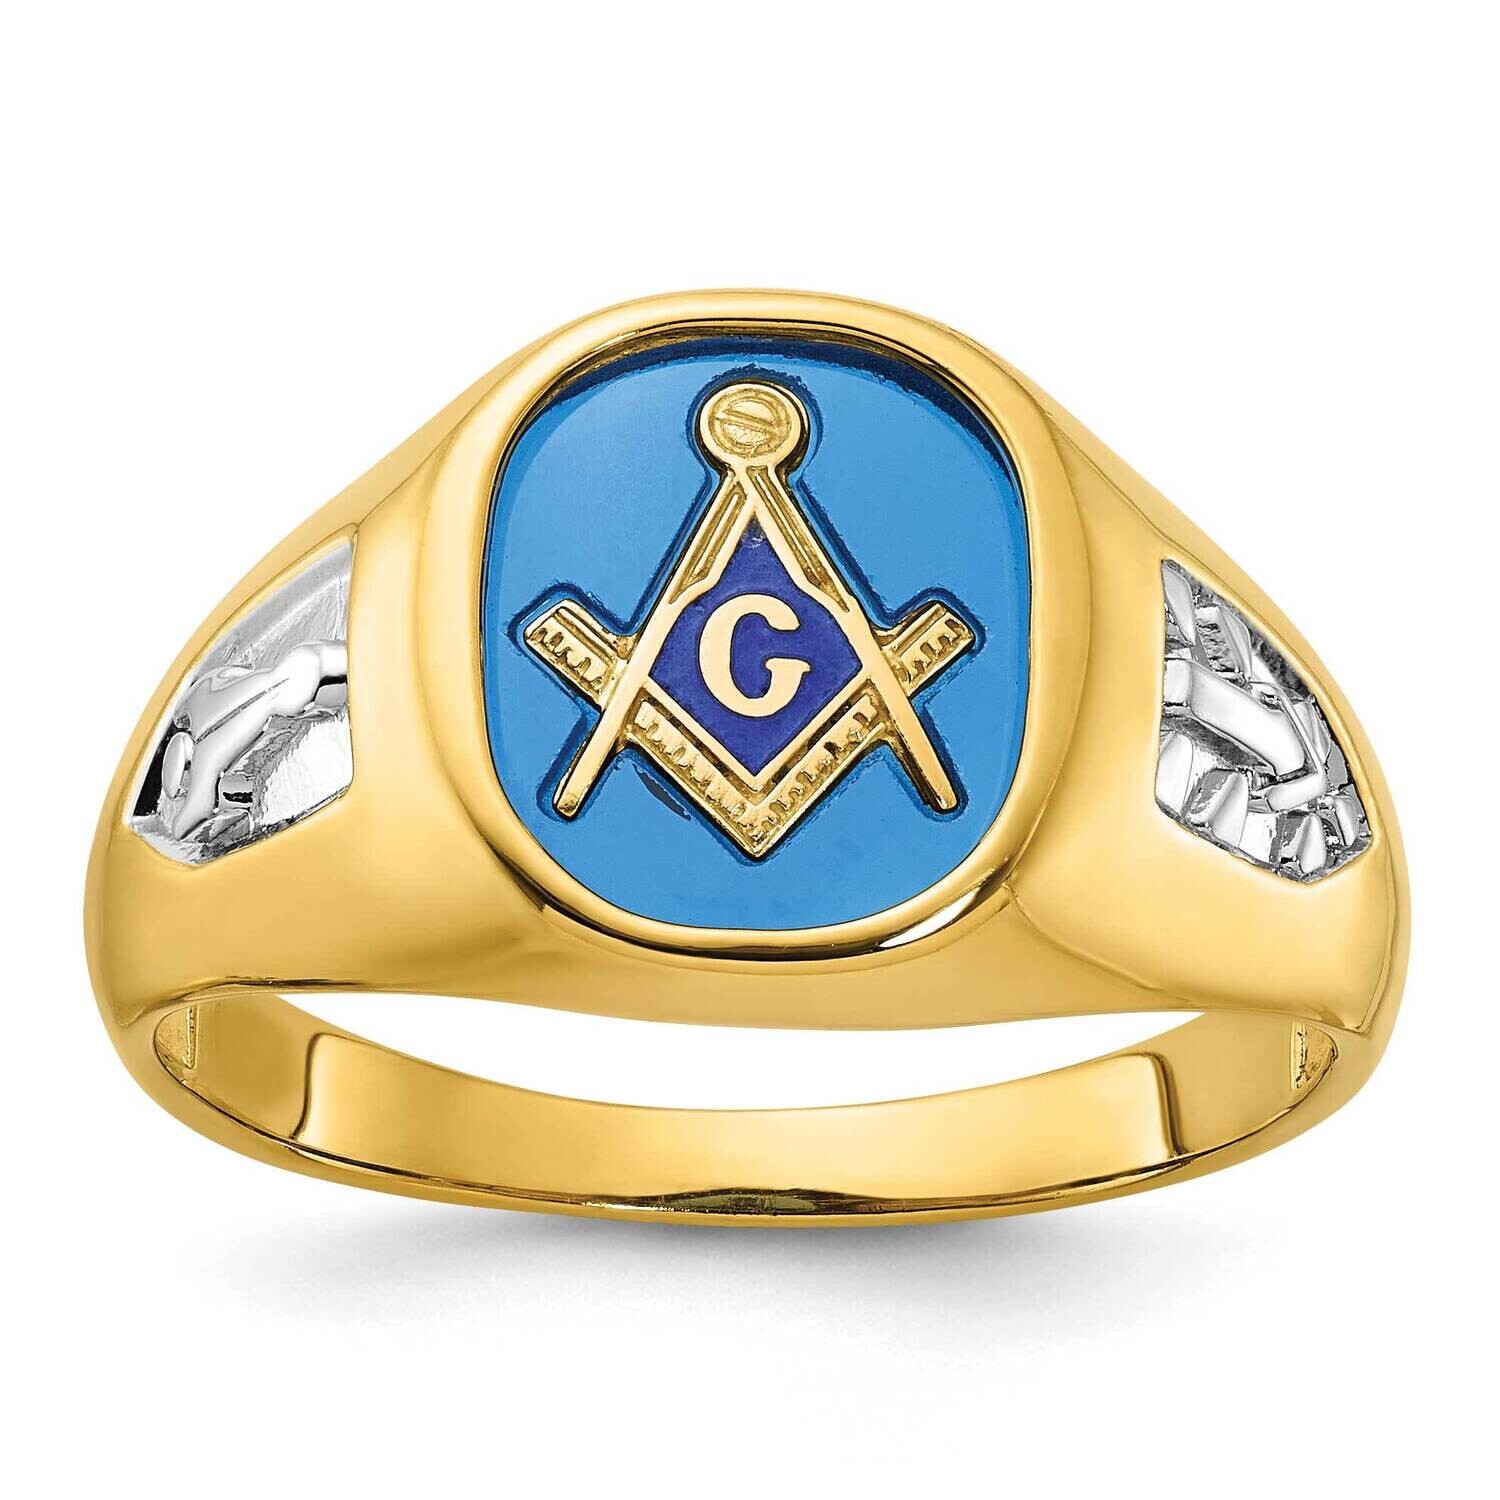 Ibgoodman Men's Polished Textured Blue Lodge Master Masonic Ring Mounting 14k Gold B57688-4Y